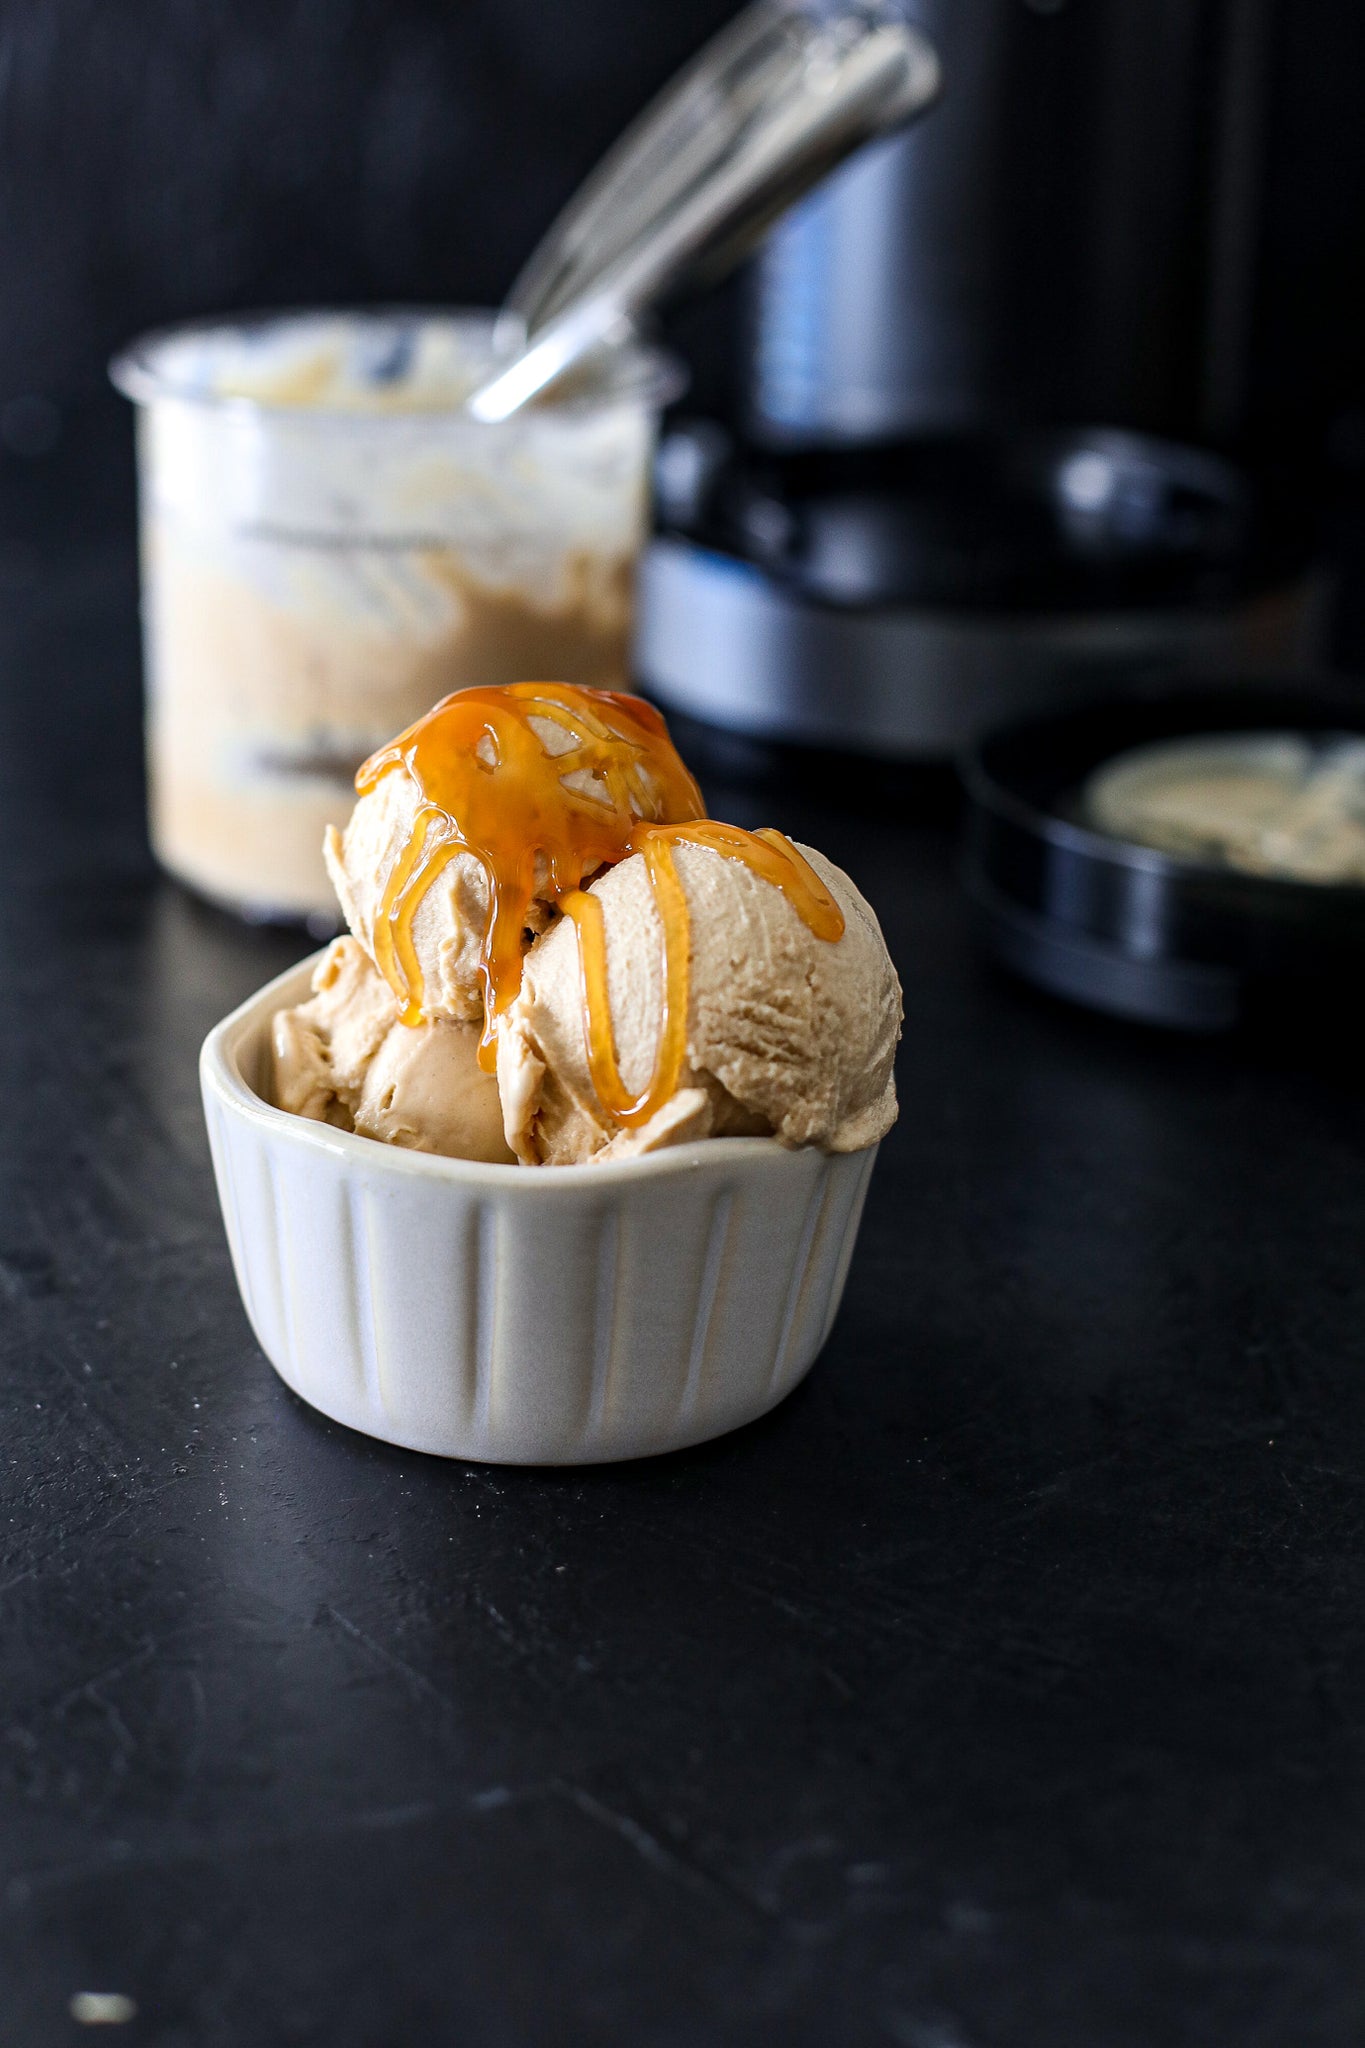 Ninja Creami Cookbook: Ice Cream & Gelato Edition - The Ice Cream